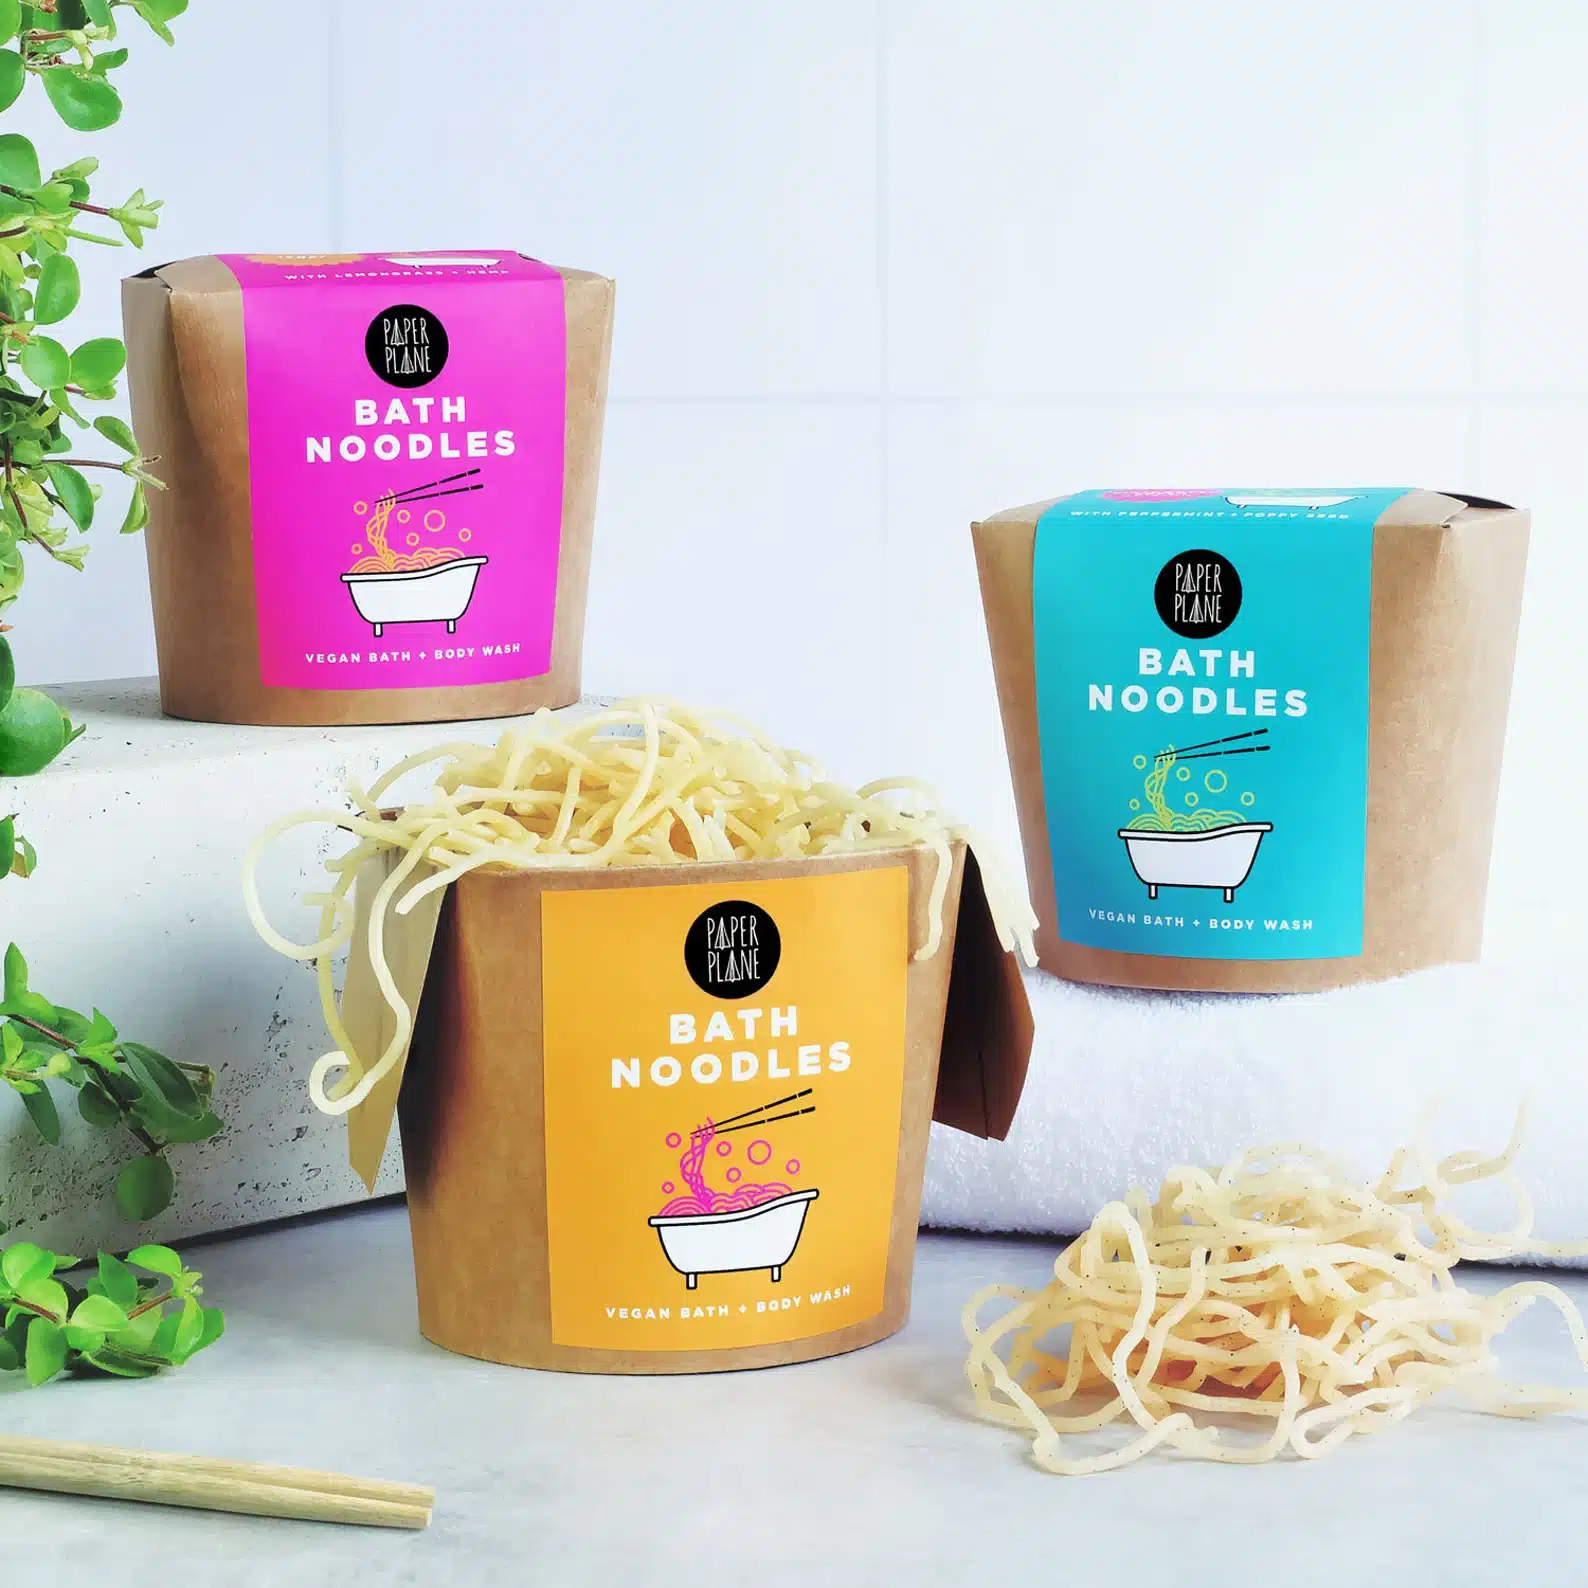 Bath Noodles 100% Natural and Vegan